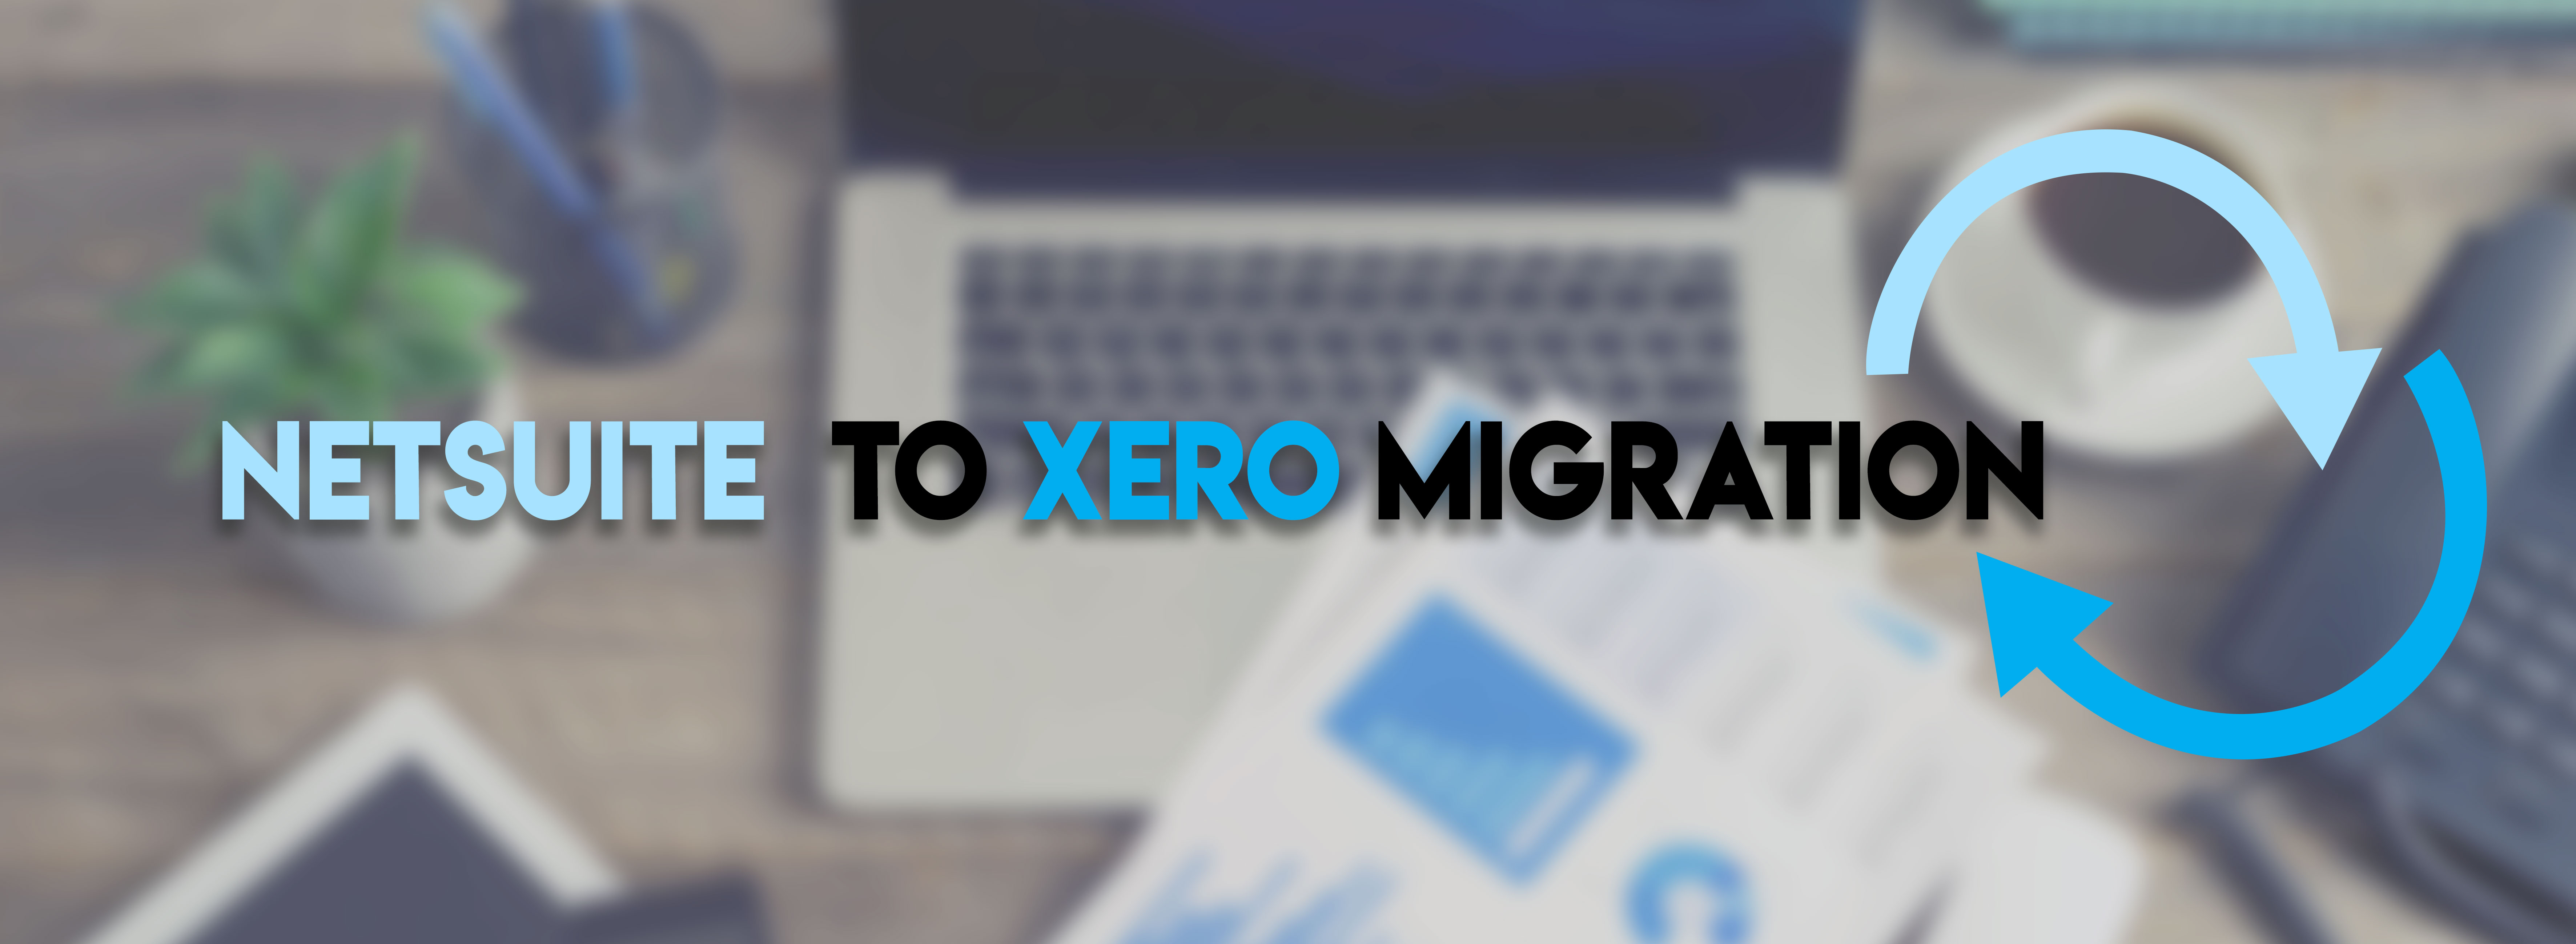 NetSuite to xero Migration